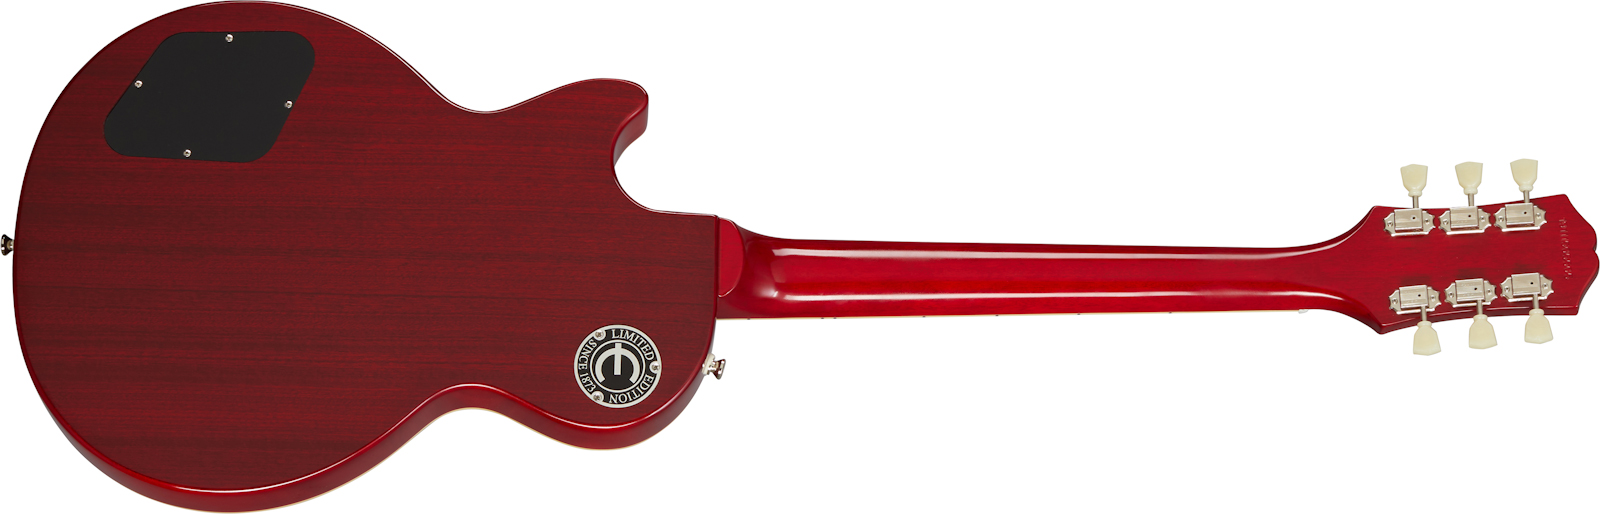 Epiphone Les Paul Standard 1959 Outfit 2h Ht Rw - Aged Dark Cherry Burst - Single cut electric guitar - Variation 1